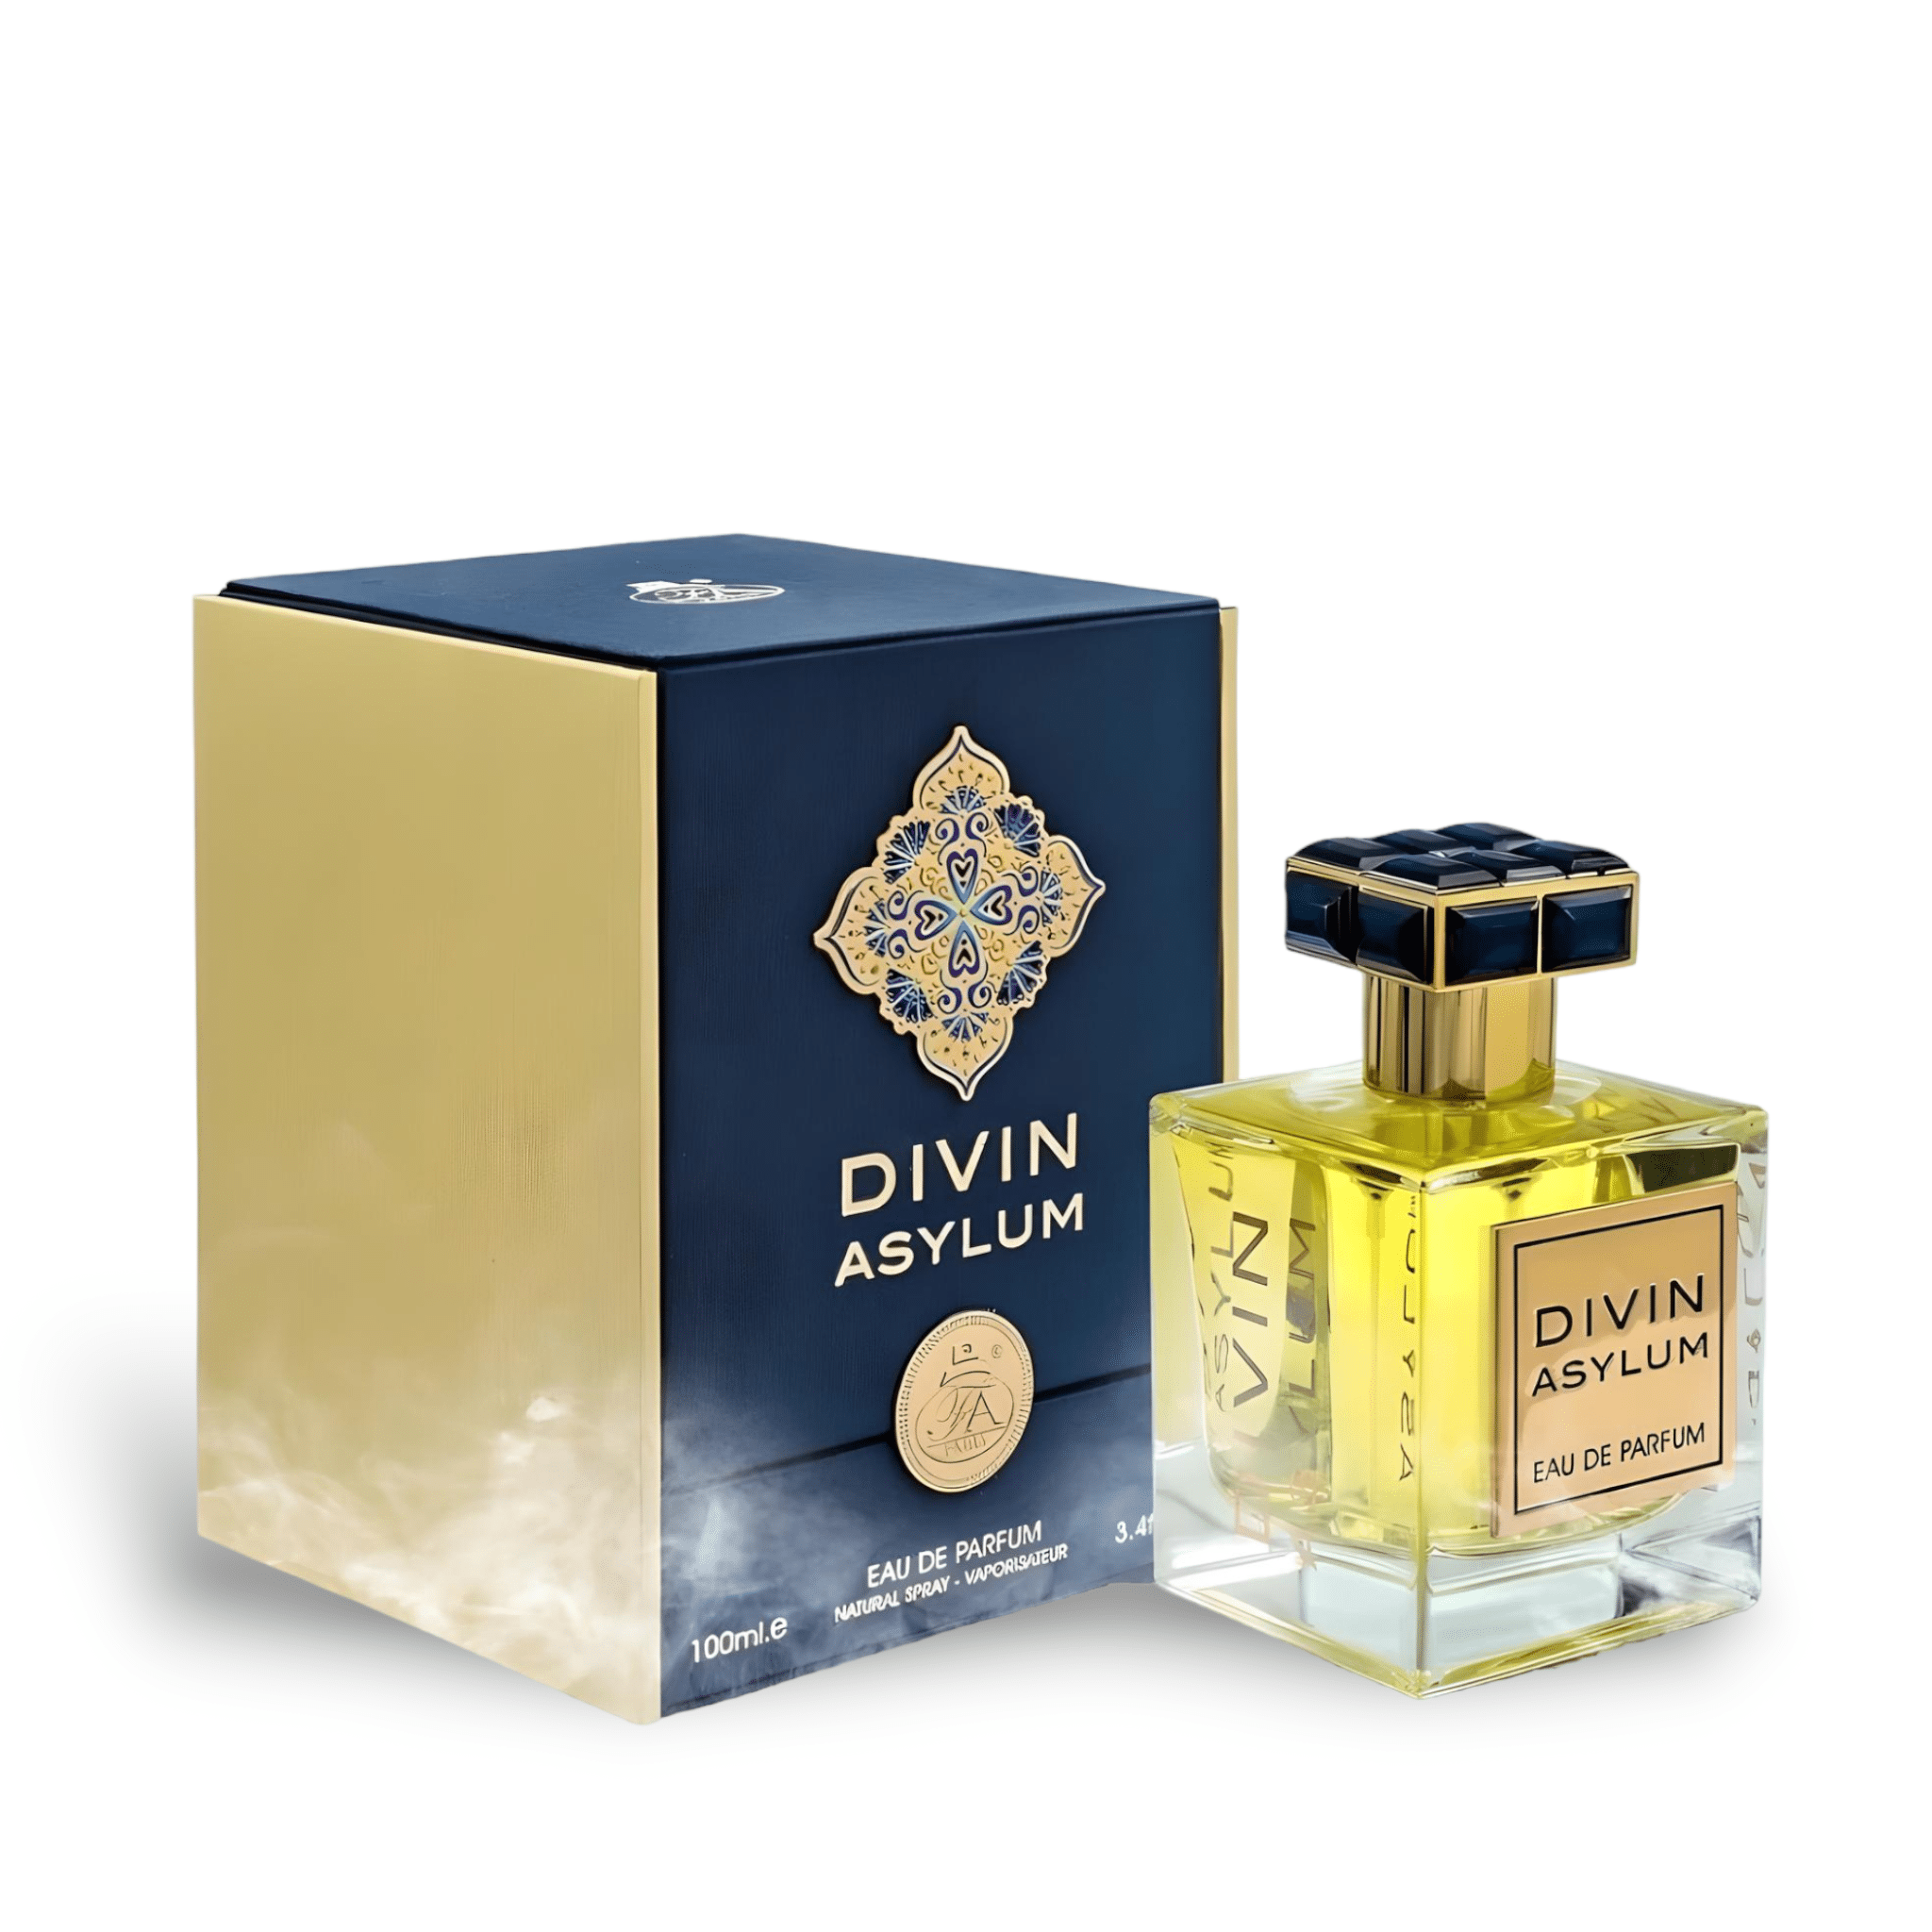 Divin Asylum Perfume / Eau De Parfum 100Ml By Fa Paris (Fragrance World)